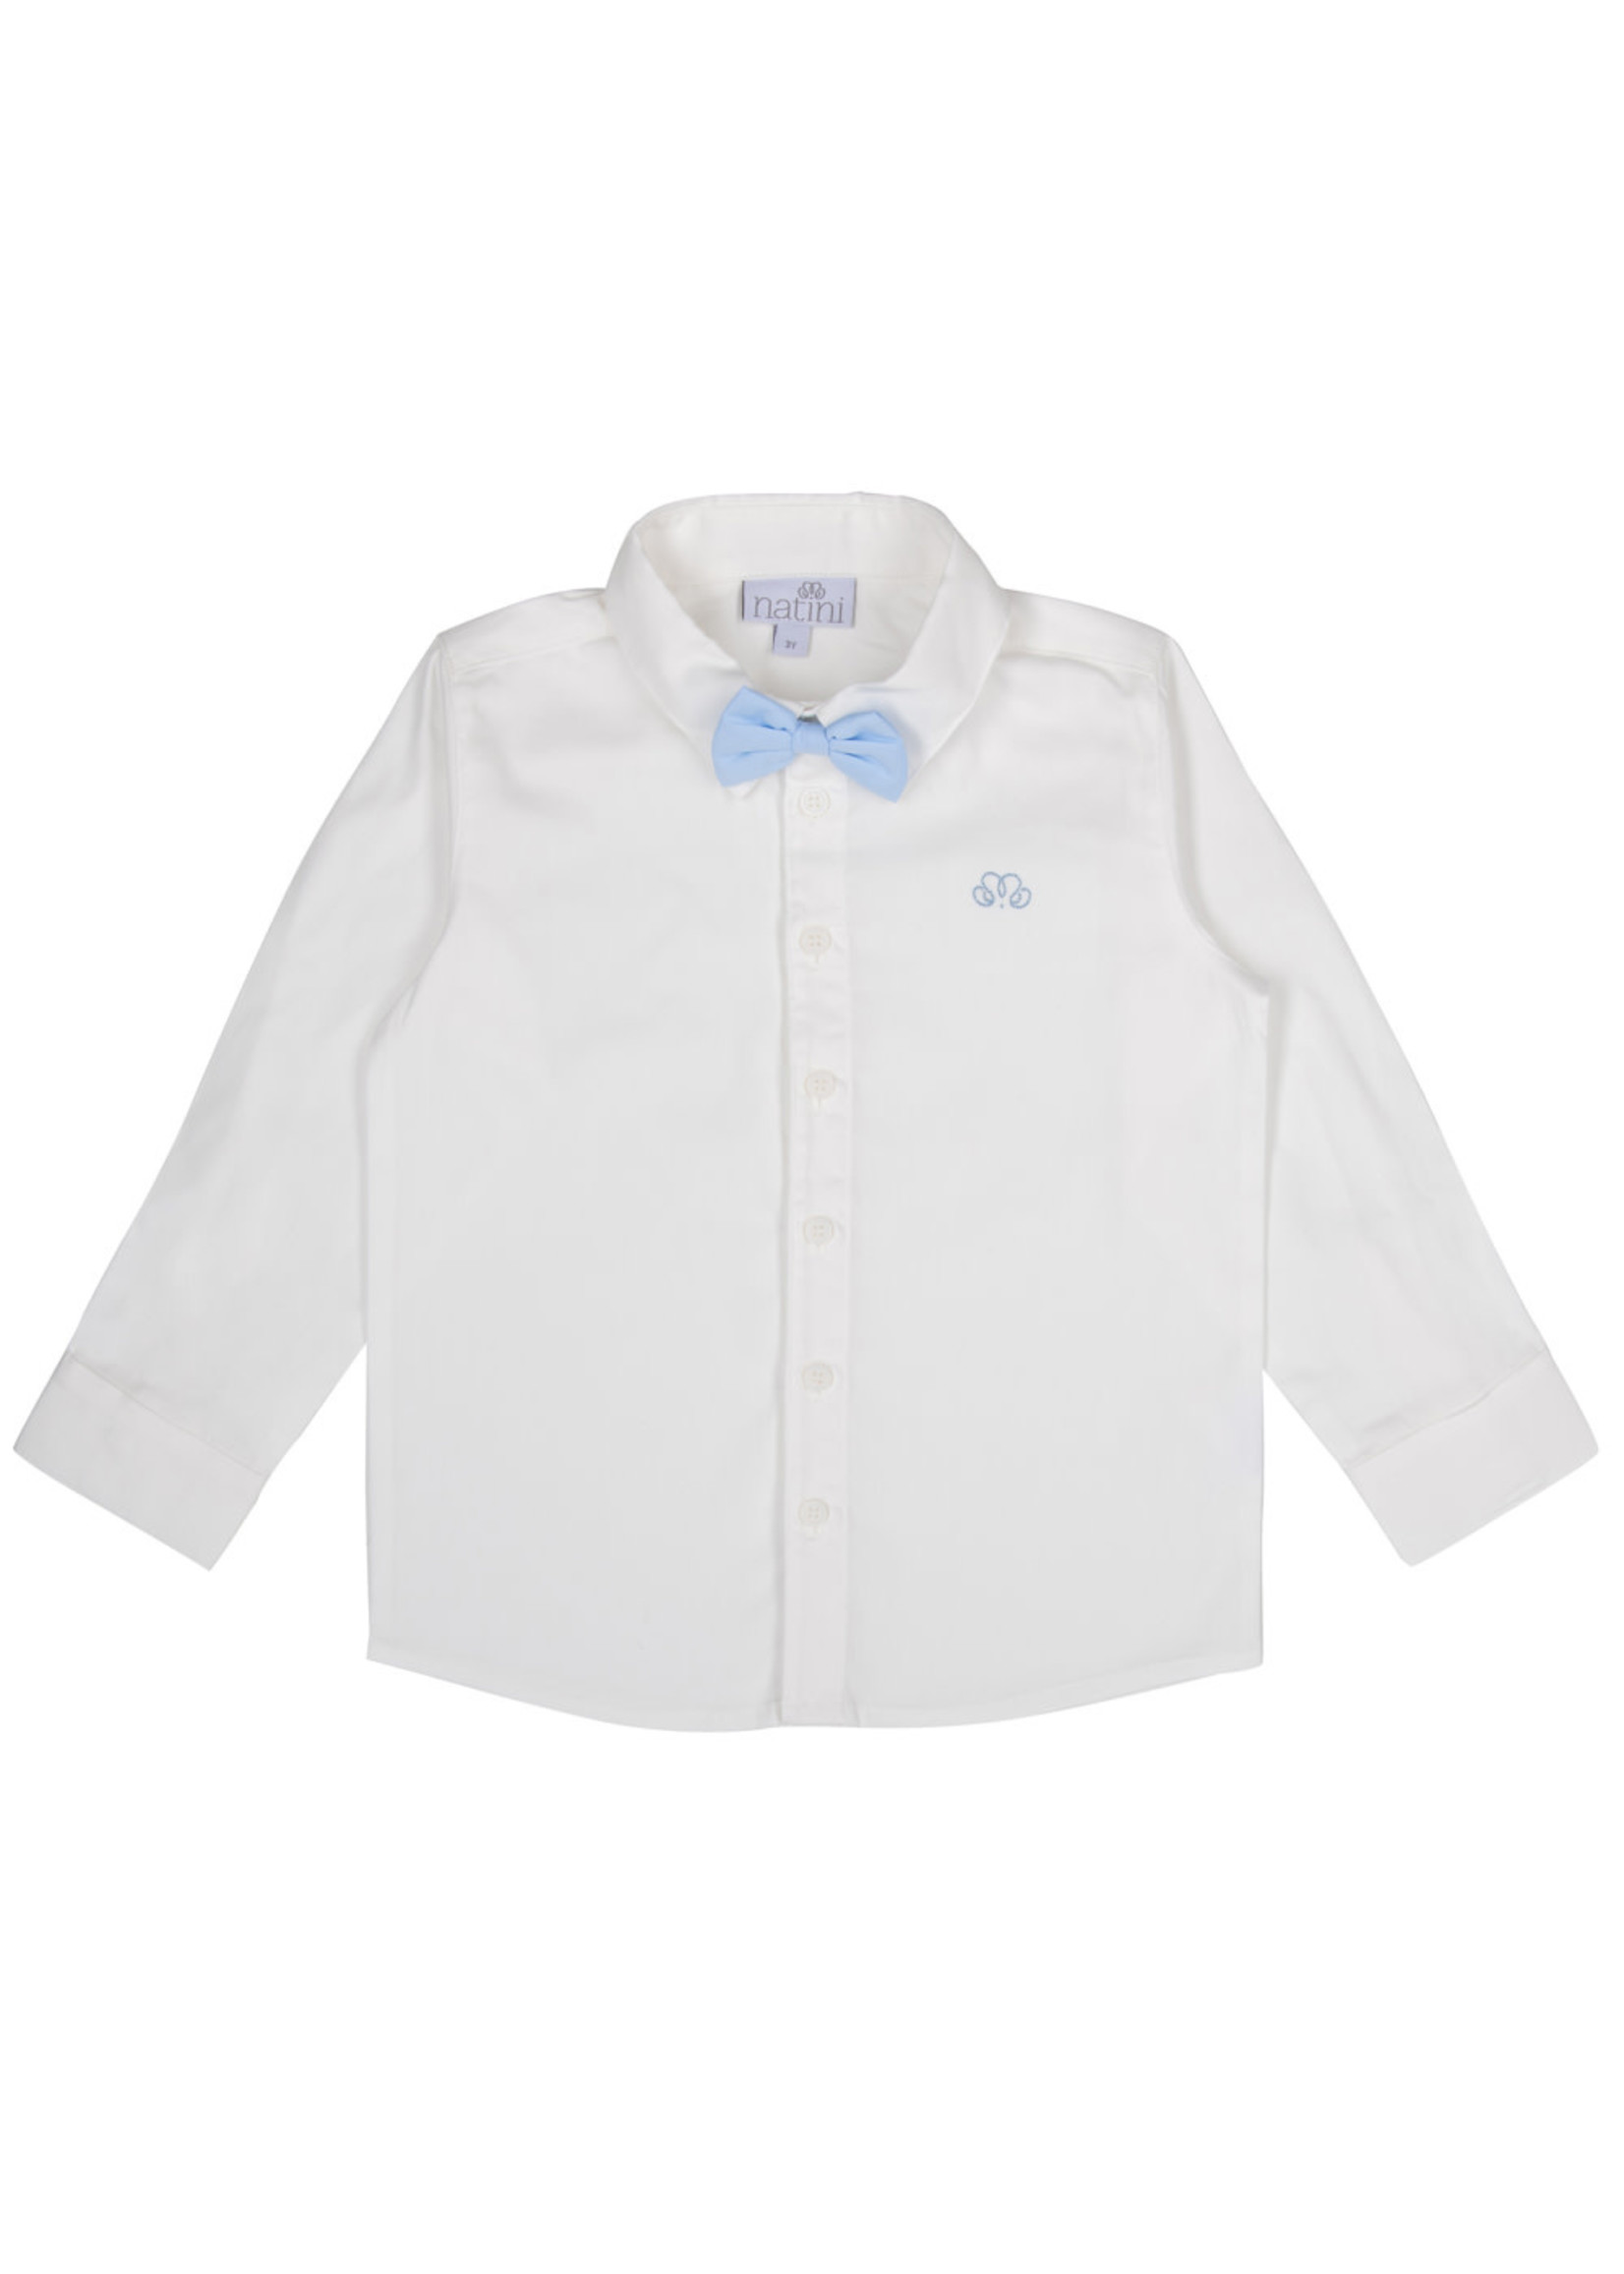 Natini Natini Boy shirt white pierrot bow lightblue - 1221 00098 0540